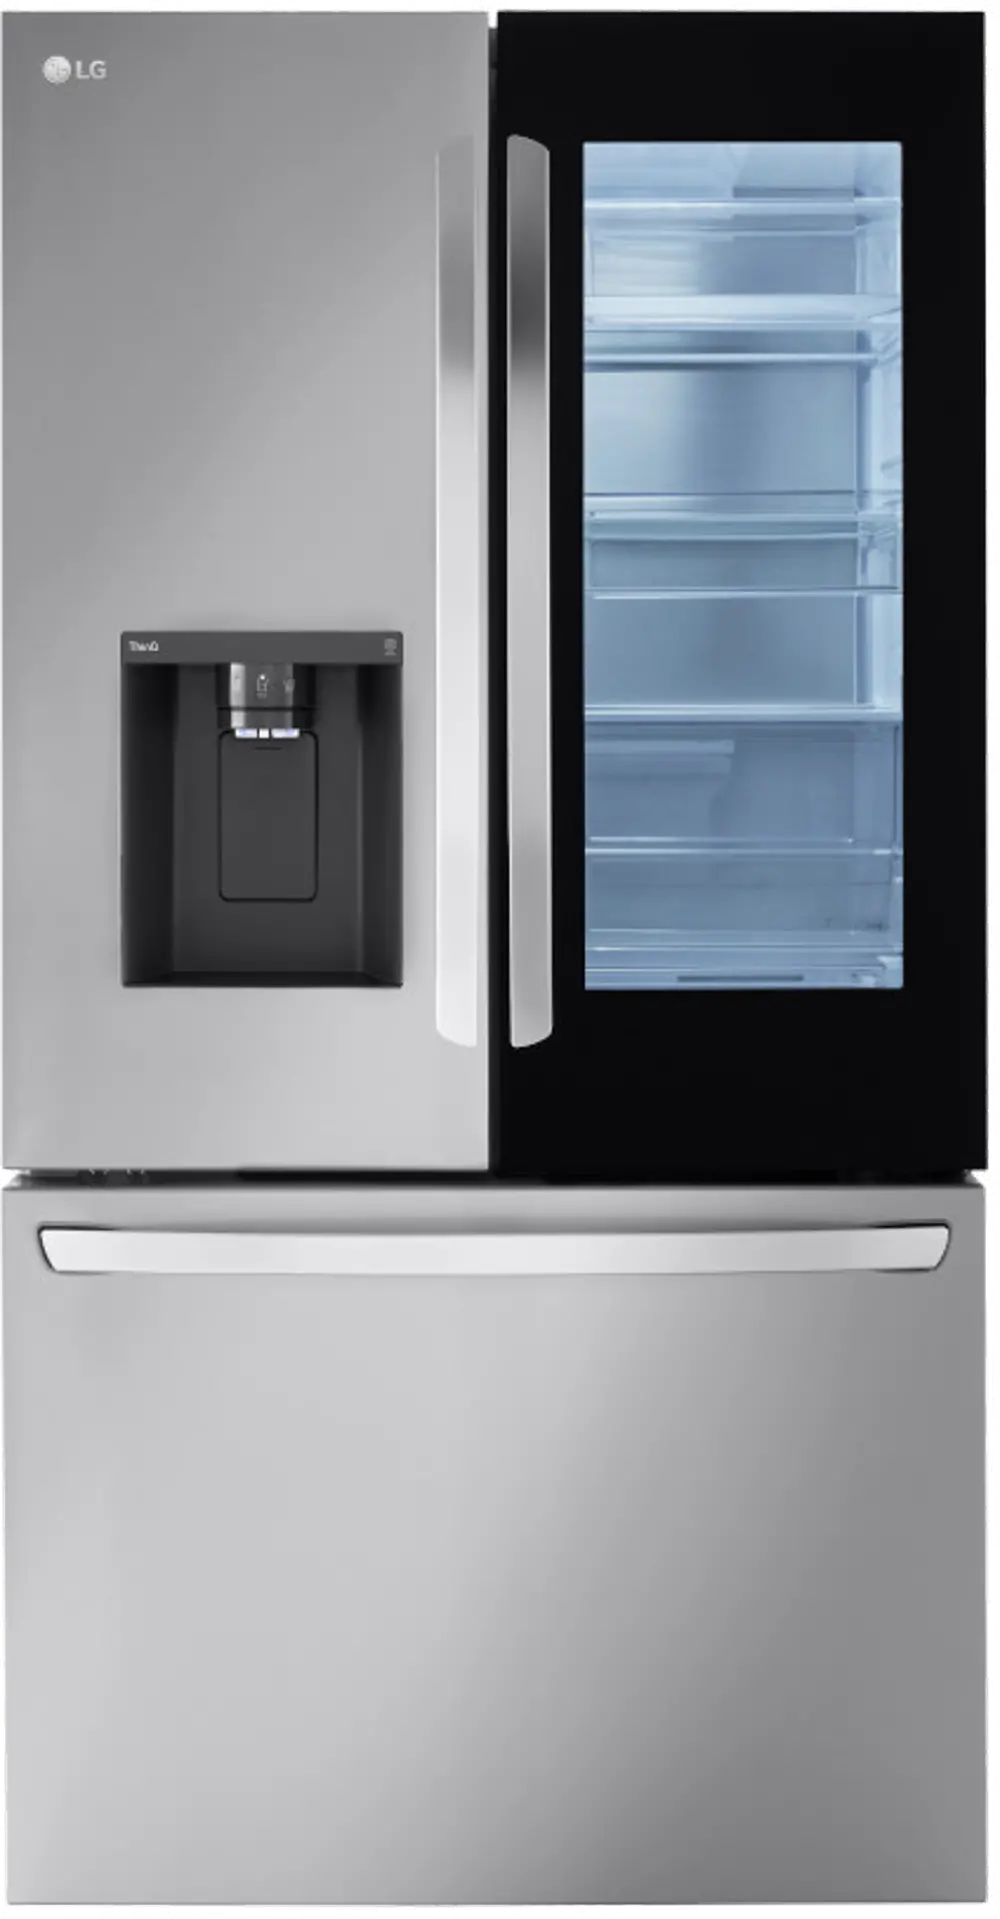 LRFOC2606S LG 26.3 cu ft French Door Refrigerator - Counter Depth Stainless Steel-1